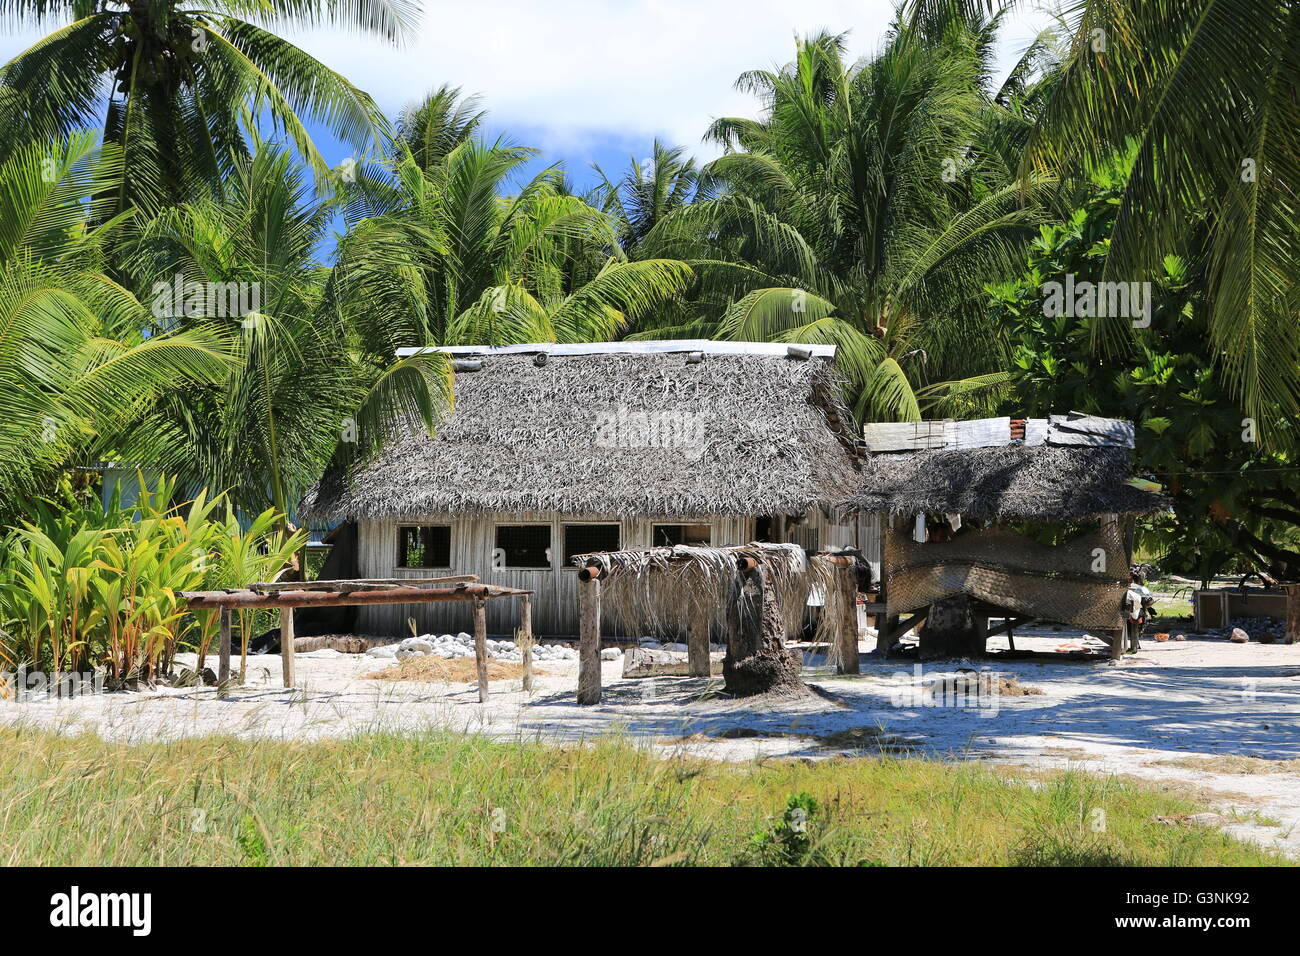 Hut made from coconut palm tree in the village, Christmas Island, Kiribati Stock Photo